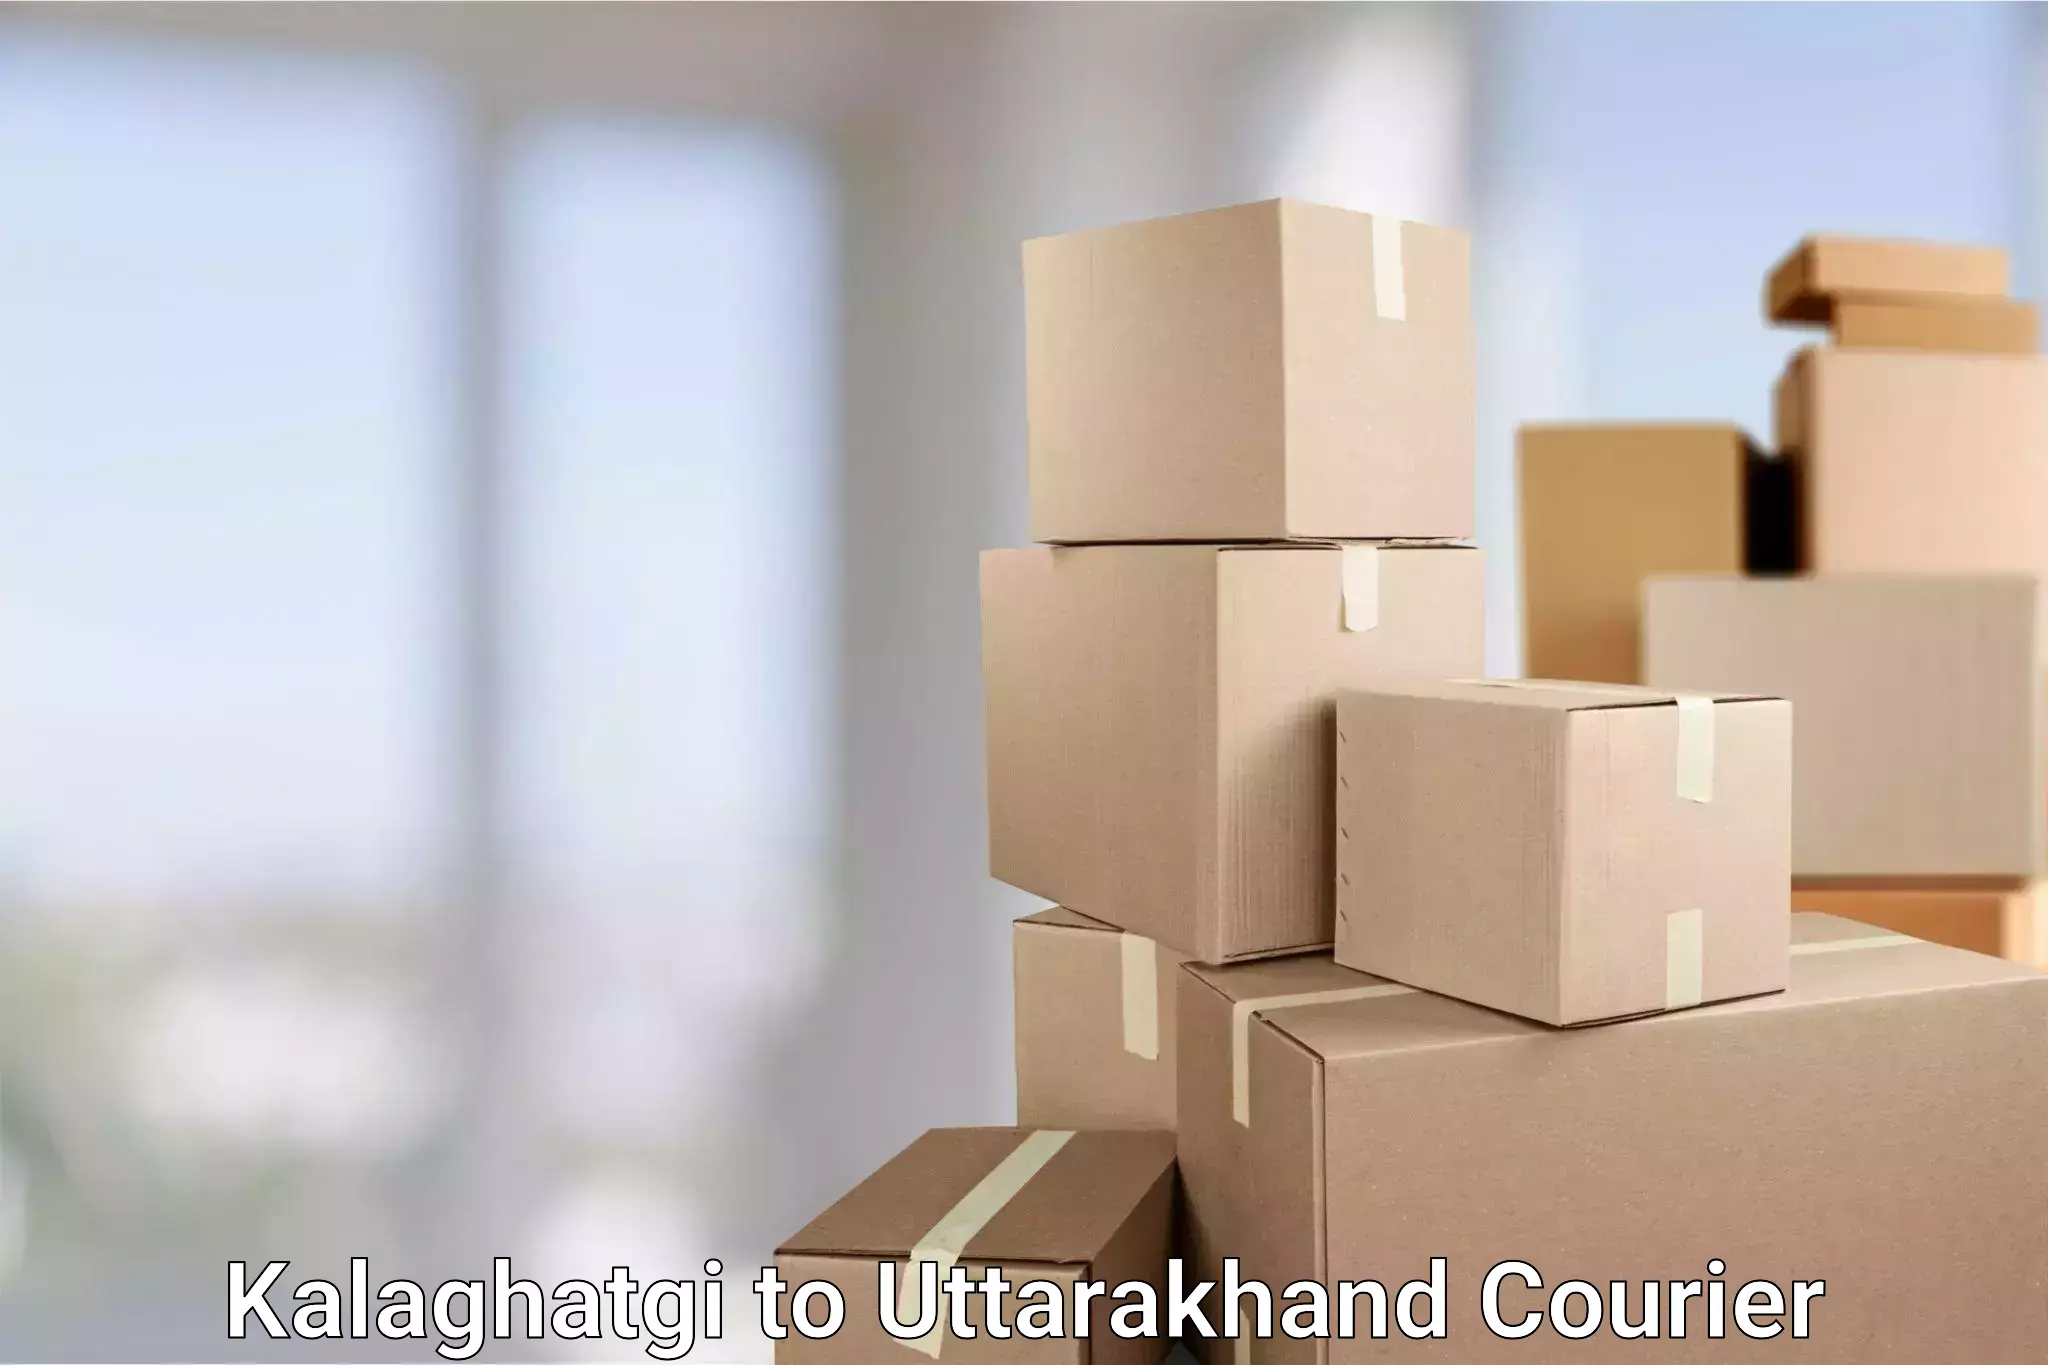 High-performance logistics Kalaghatgi to Rishikesh